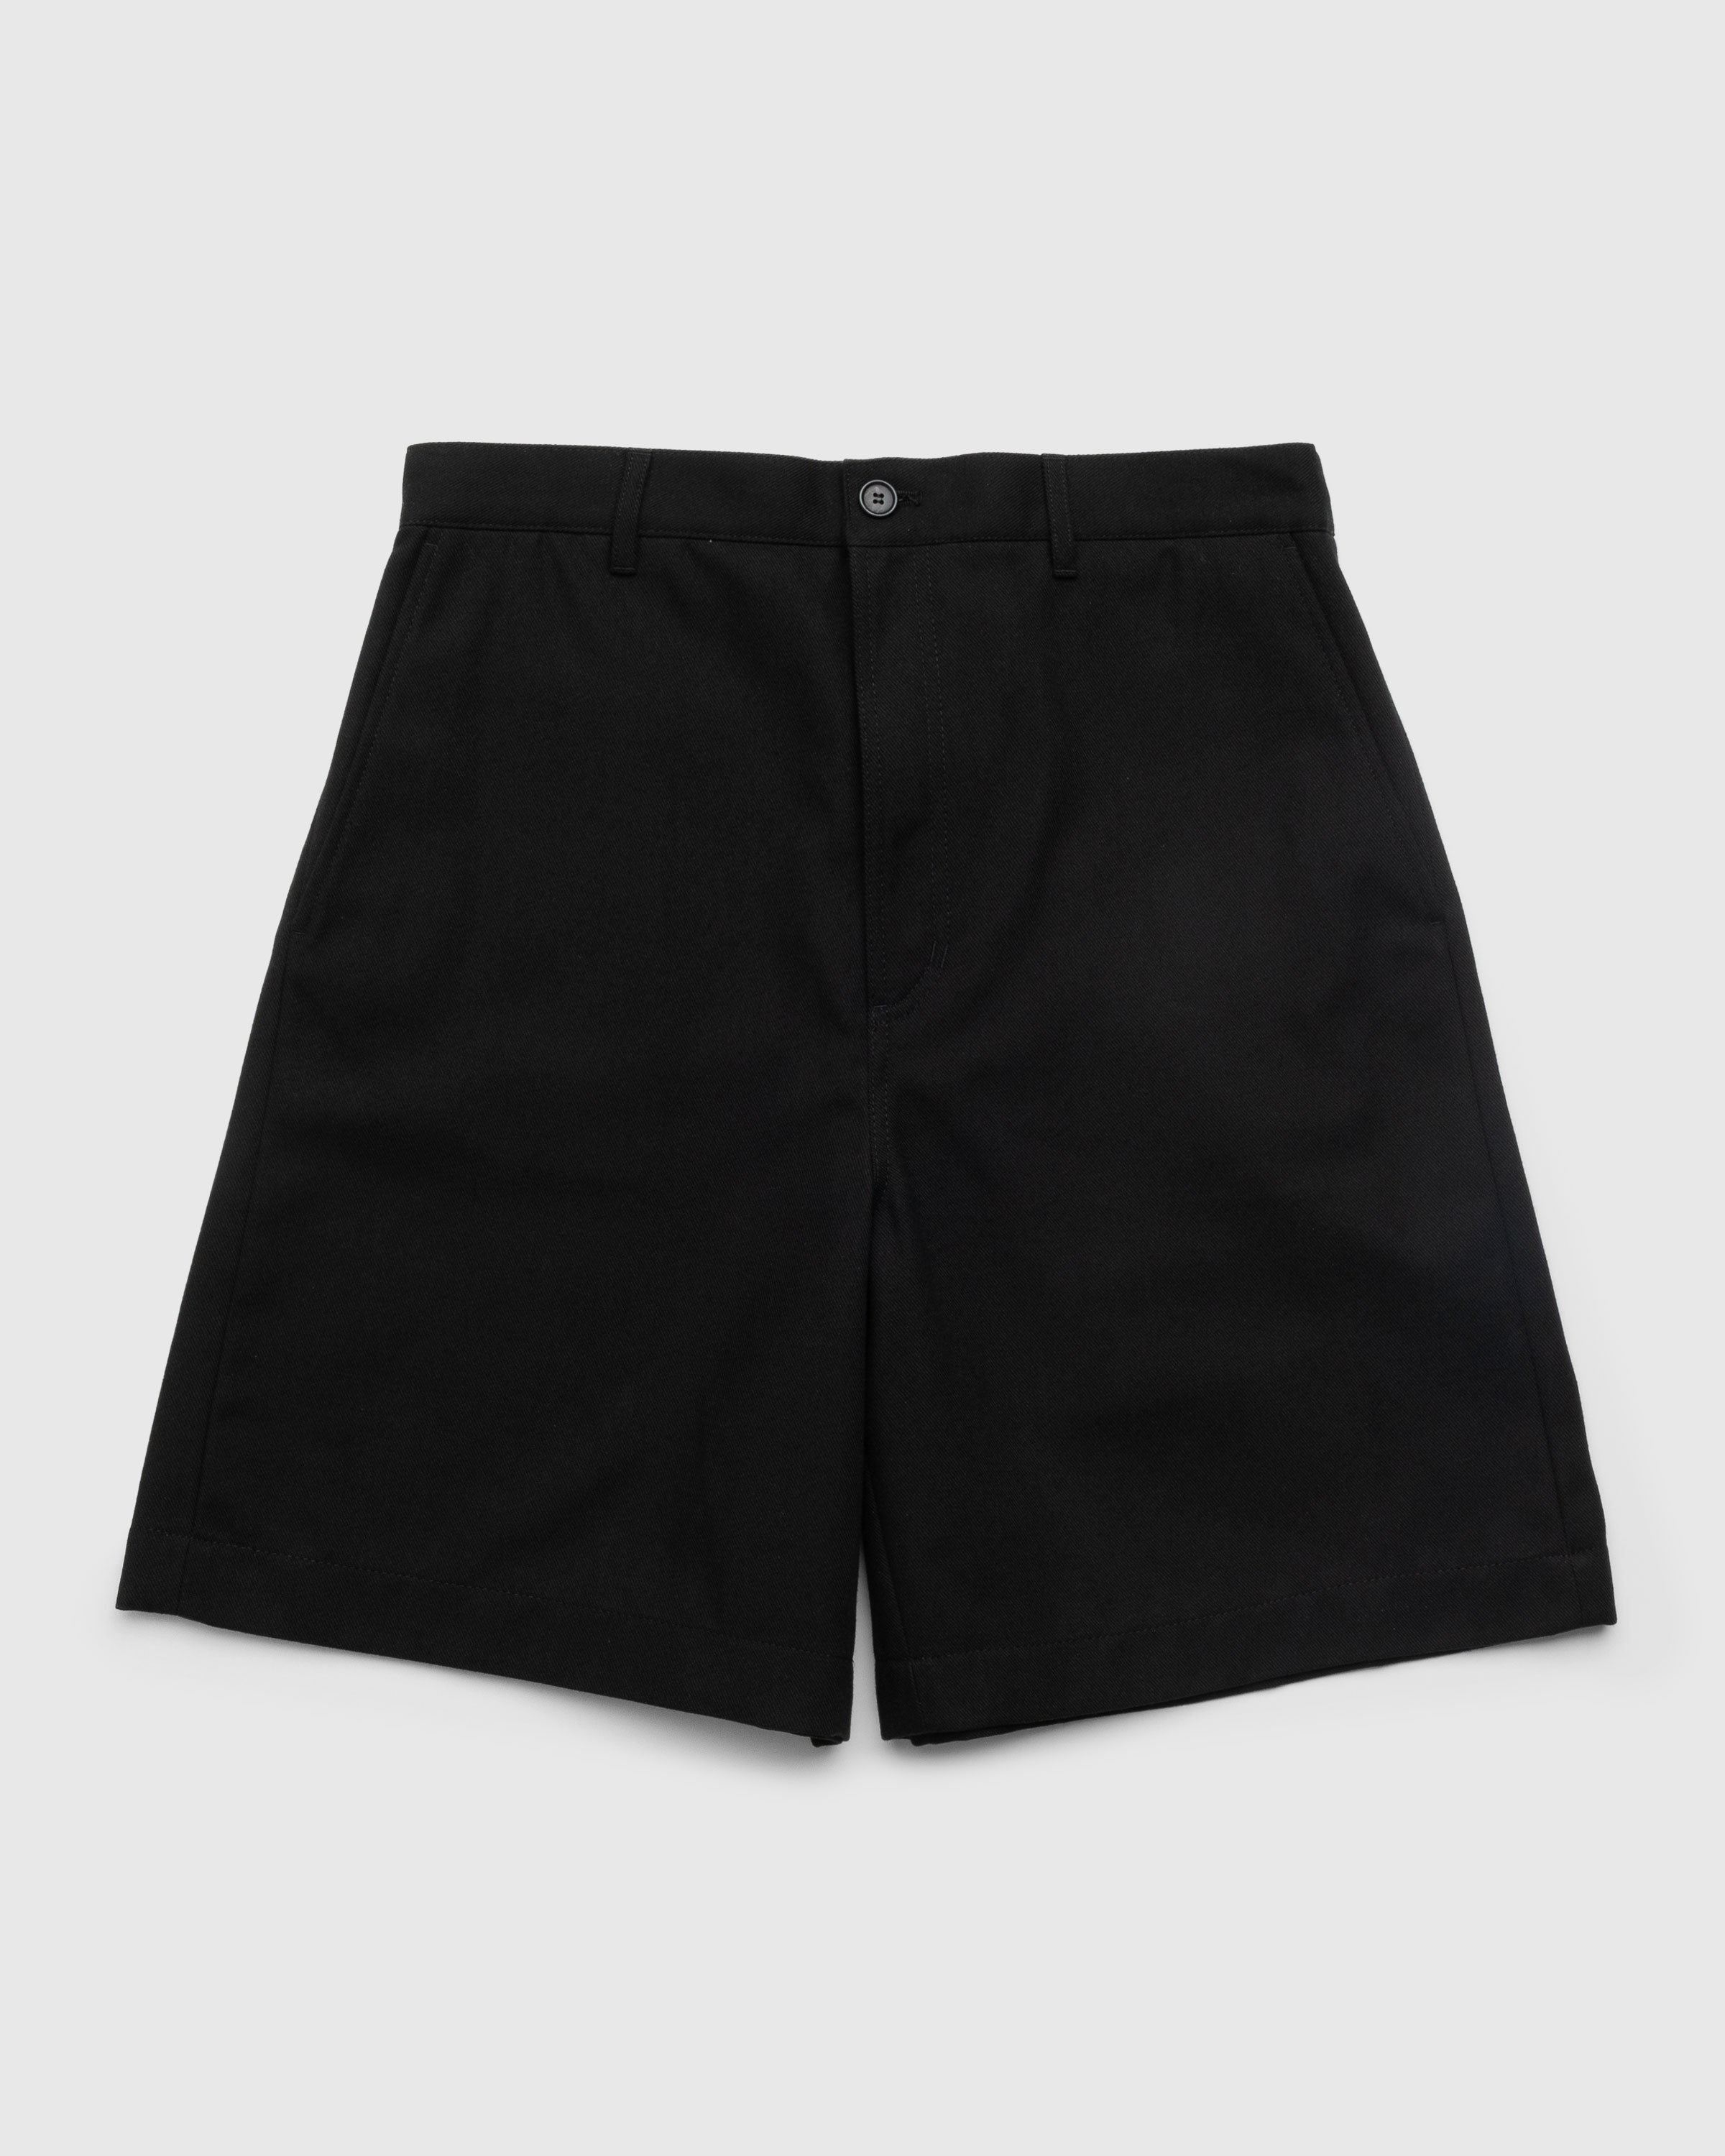 Acne Studios - Regular Fit Shorts Black - Clothing - Black - Image 1